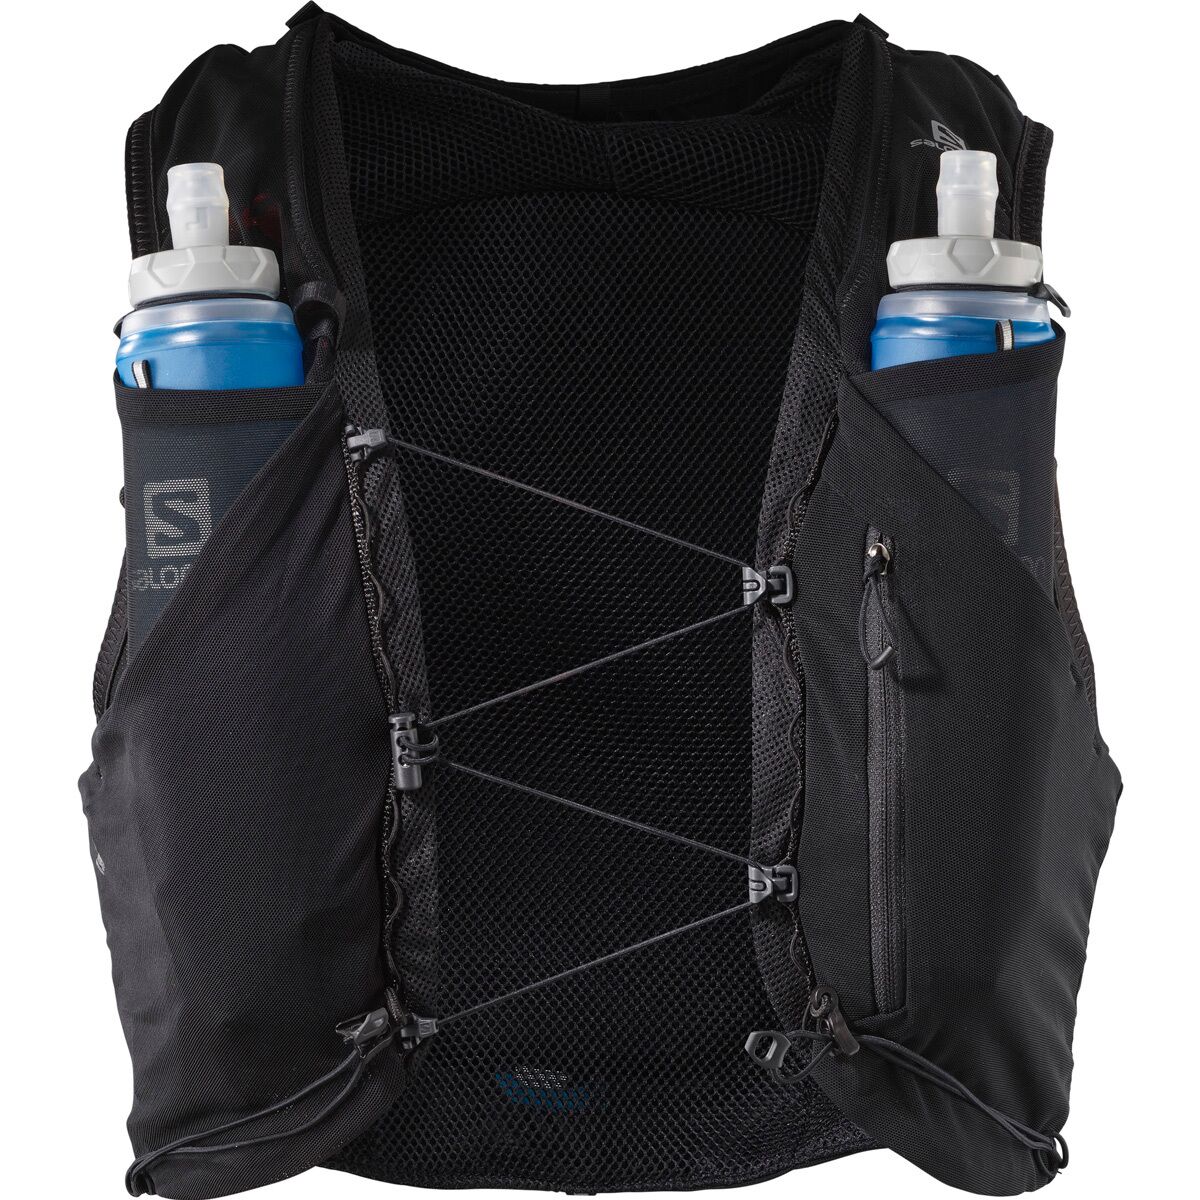 Salomon ADV Skin 5L Set Hydration Vest - Men